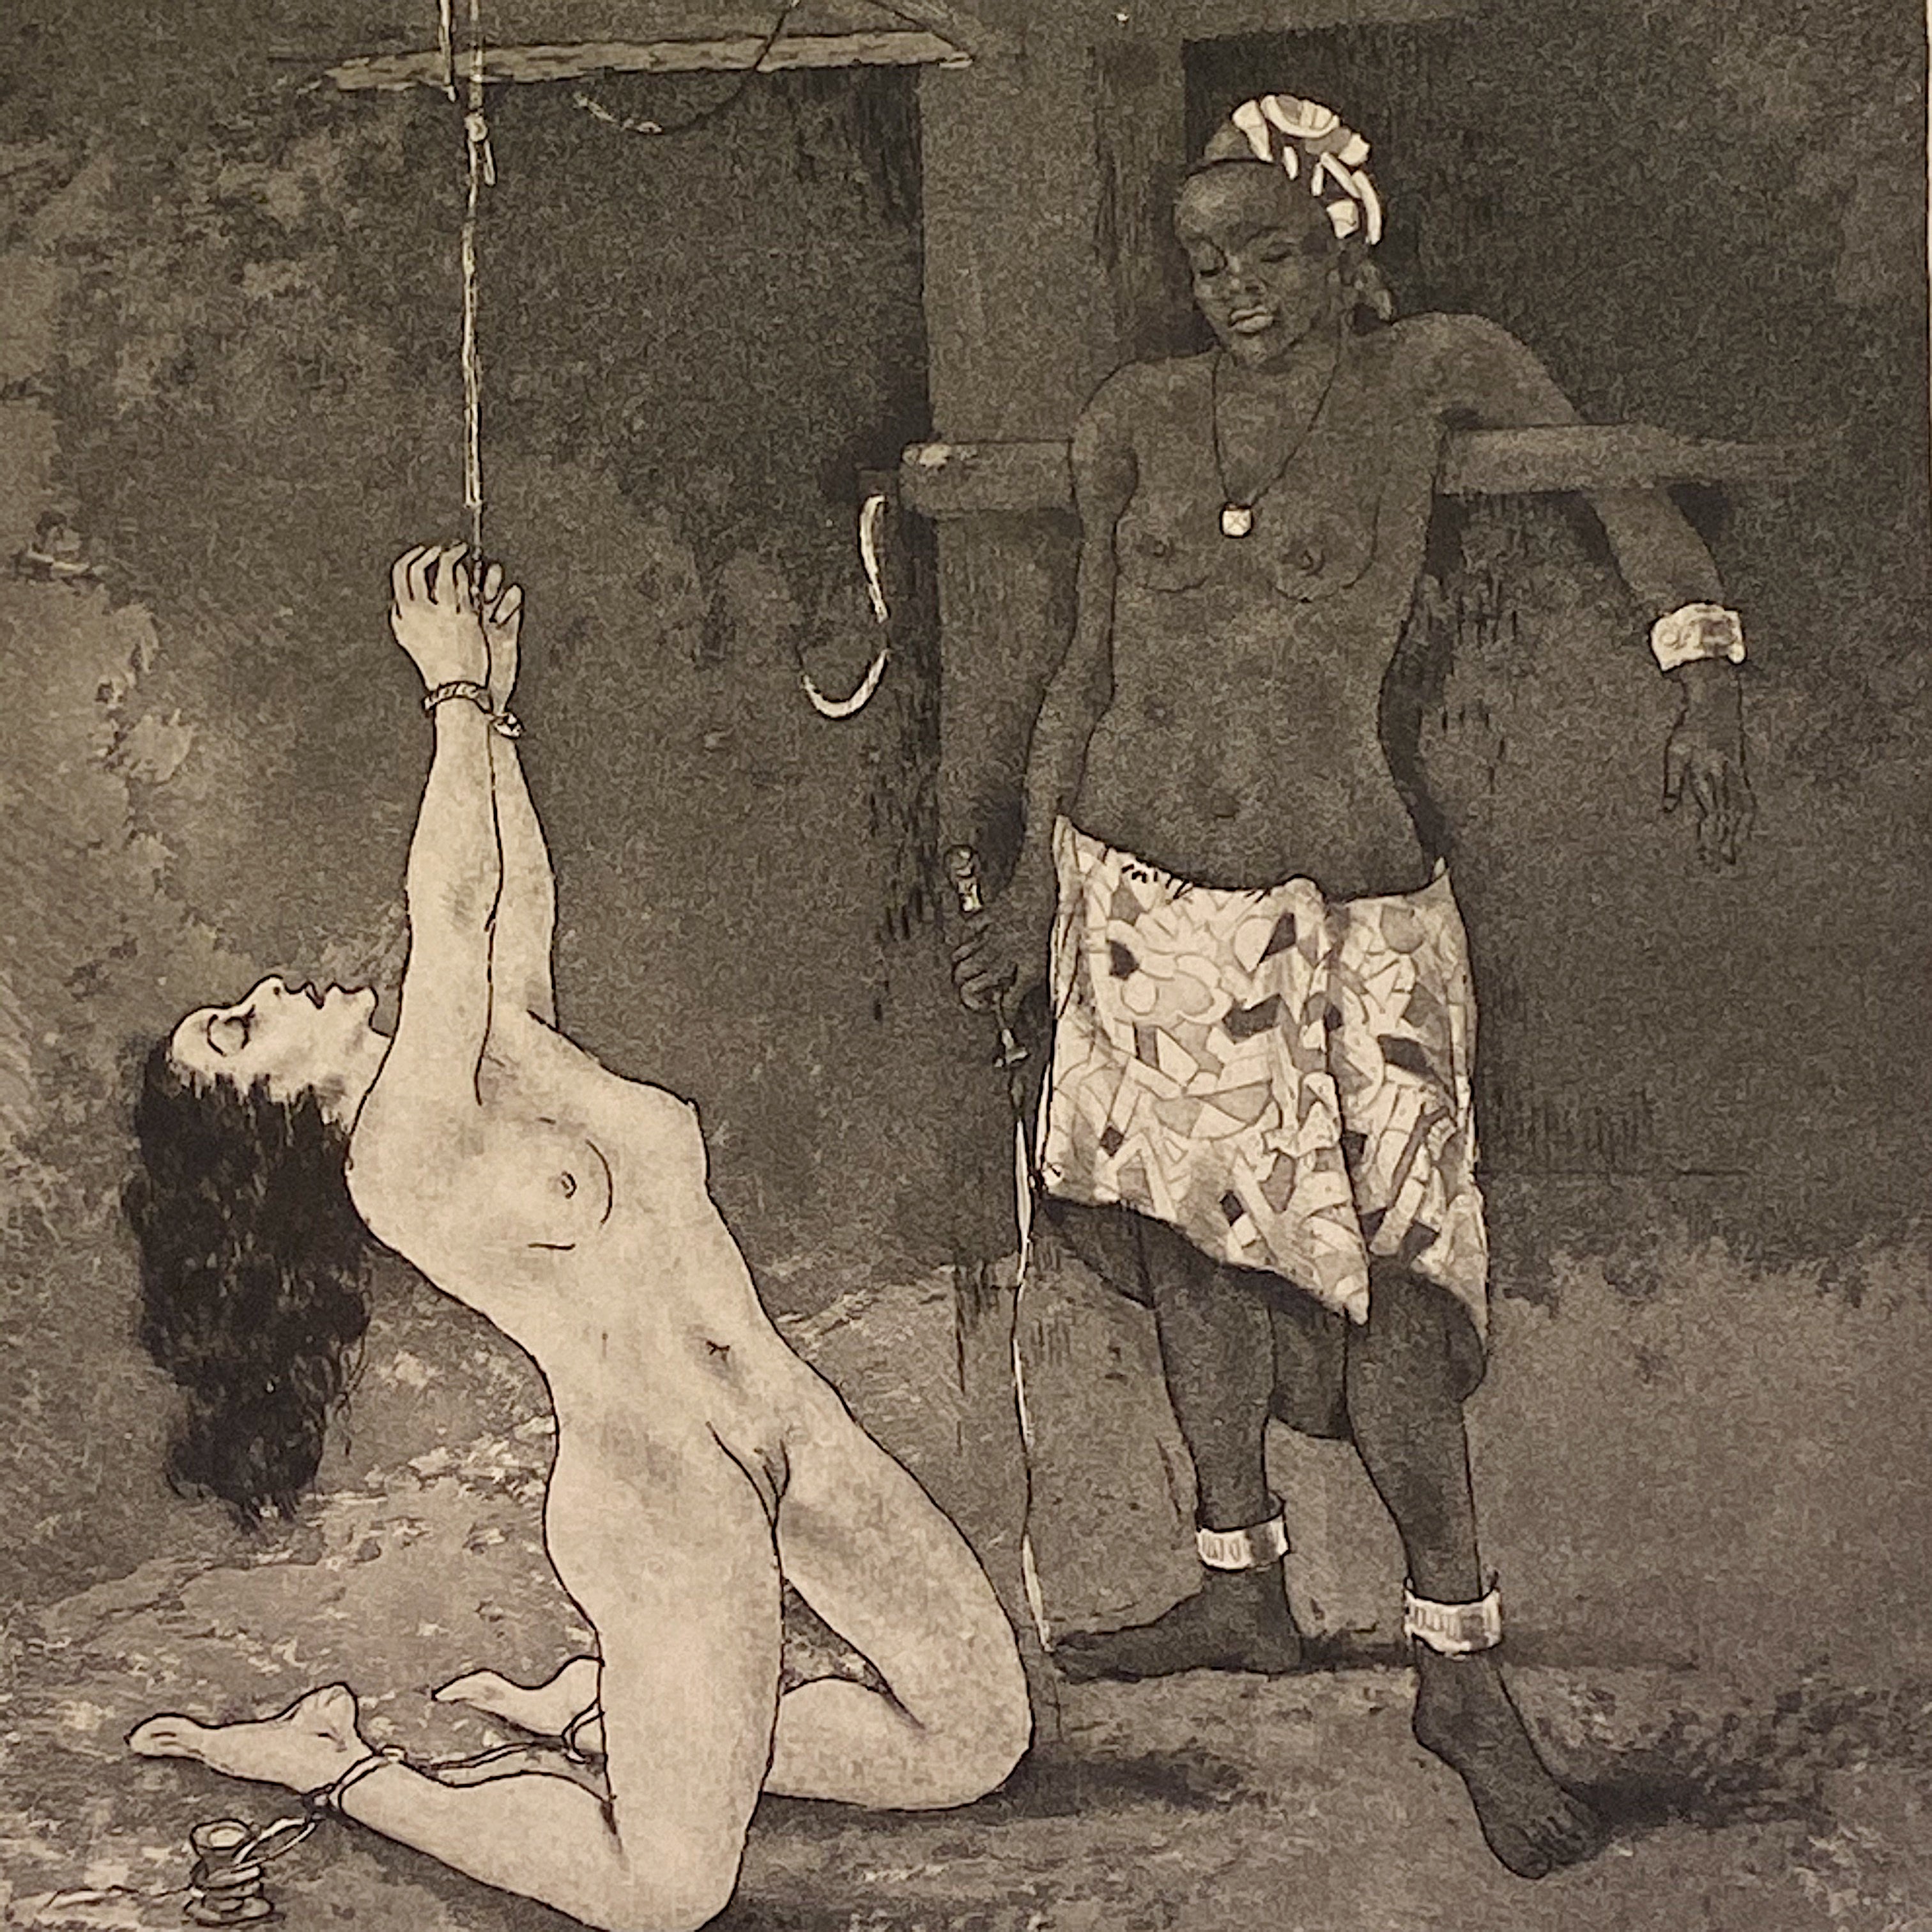 Edouard Chimot Etching of Woman in Bondage - 1920s - Role Reversal - Rare French Print - Drawings - Risque Underground Art  - Bondage